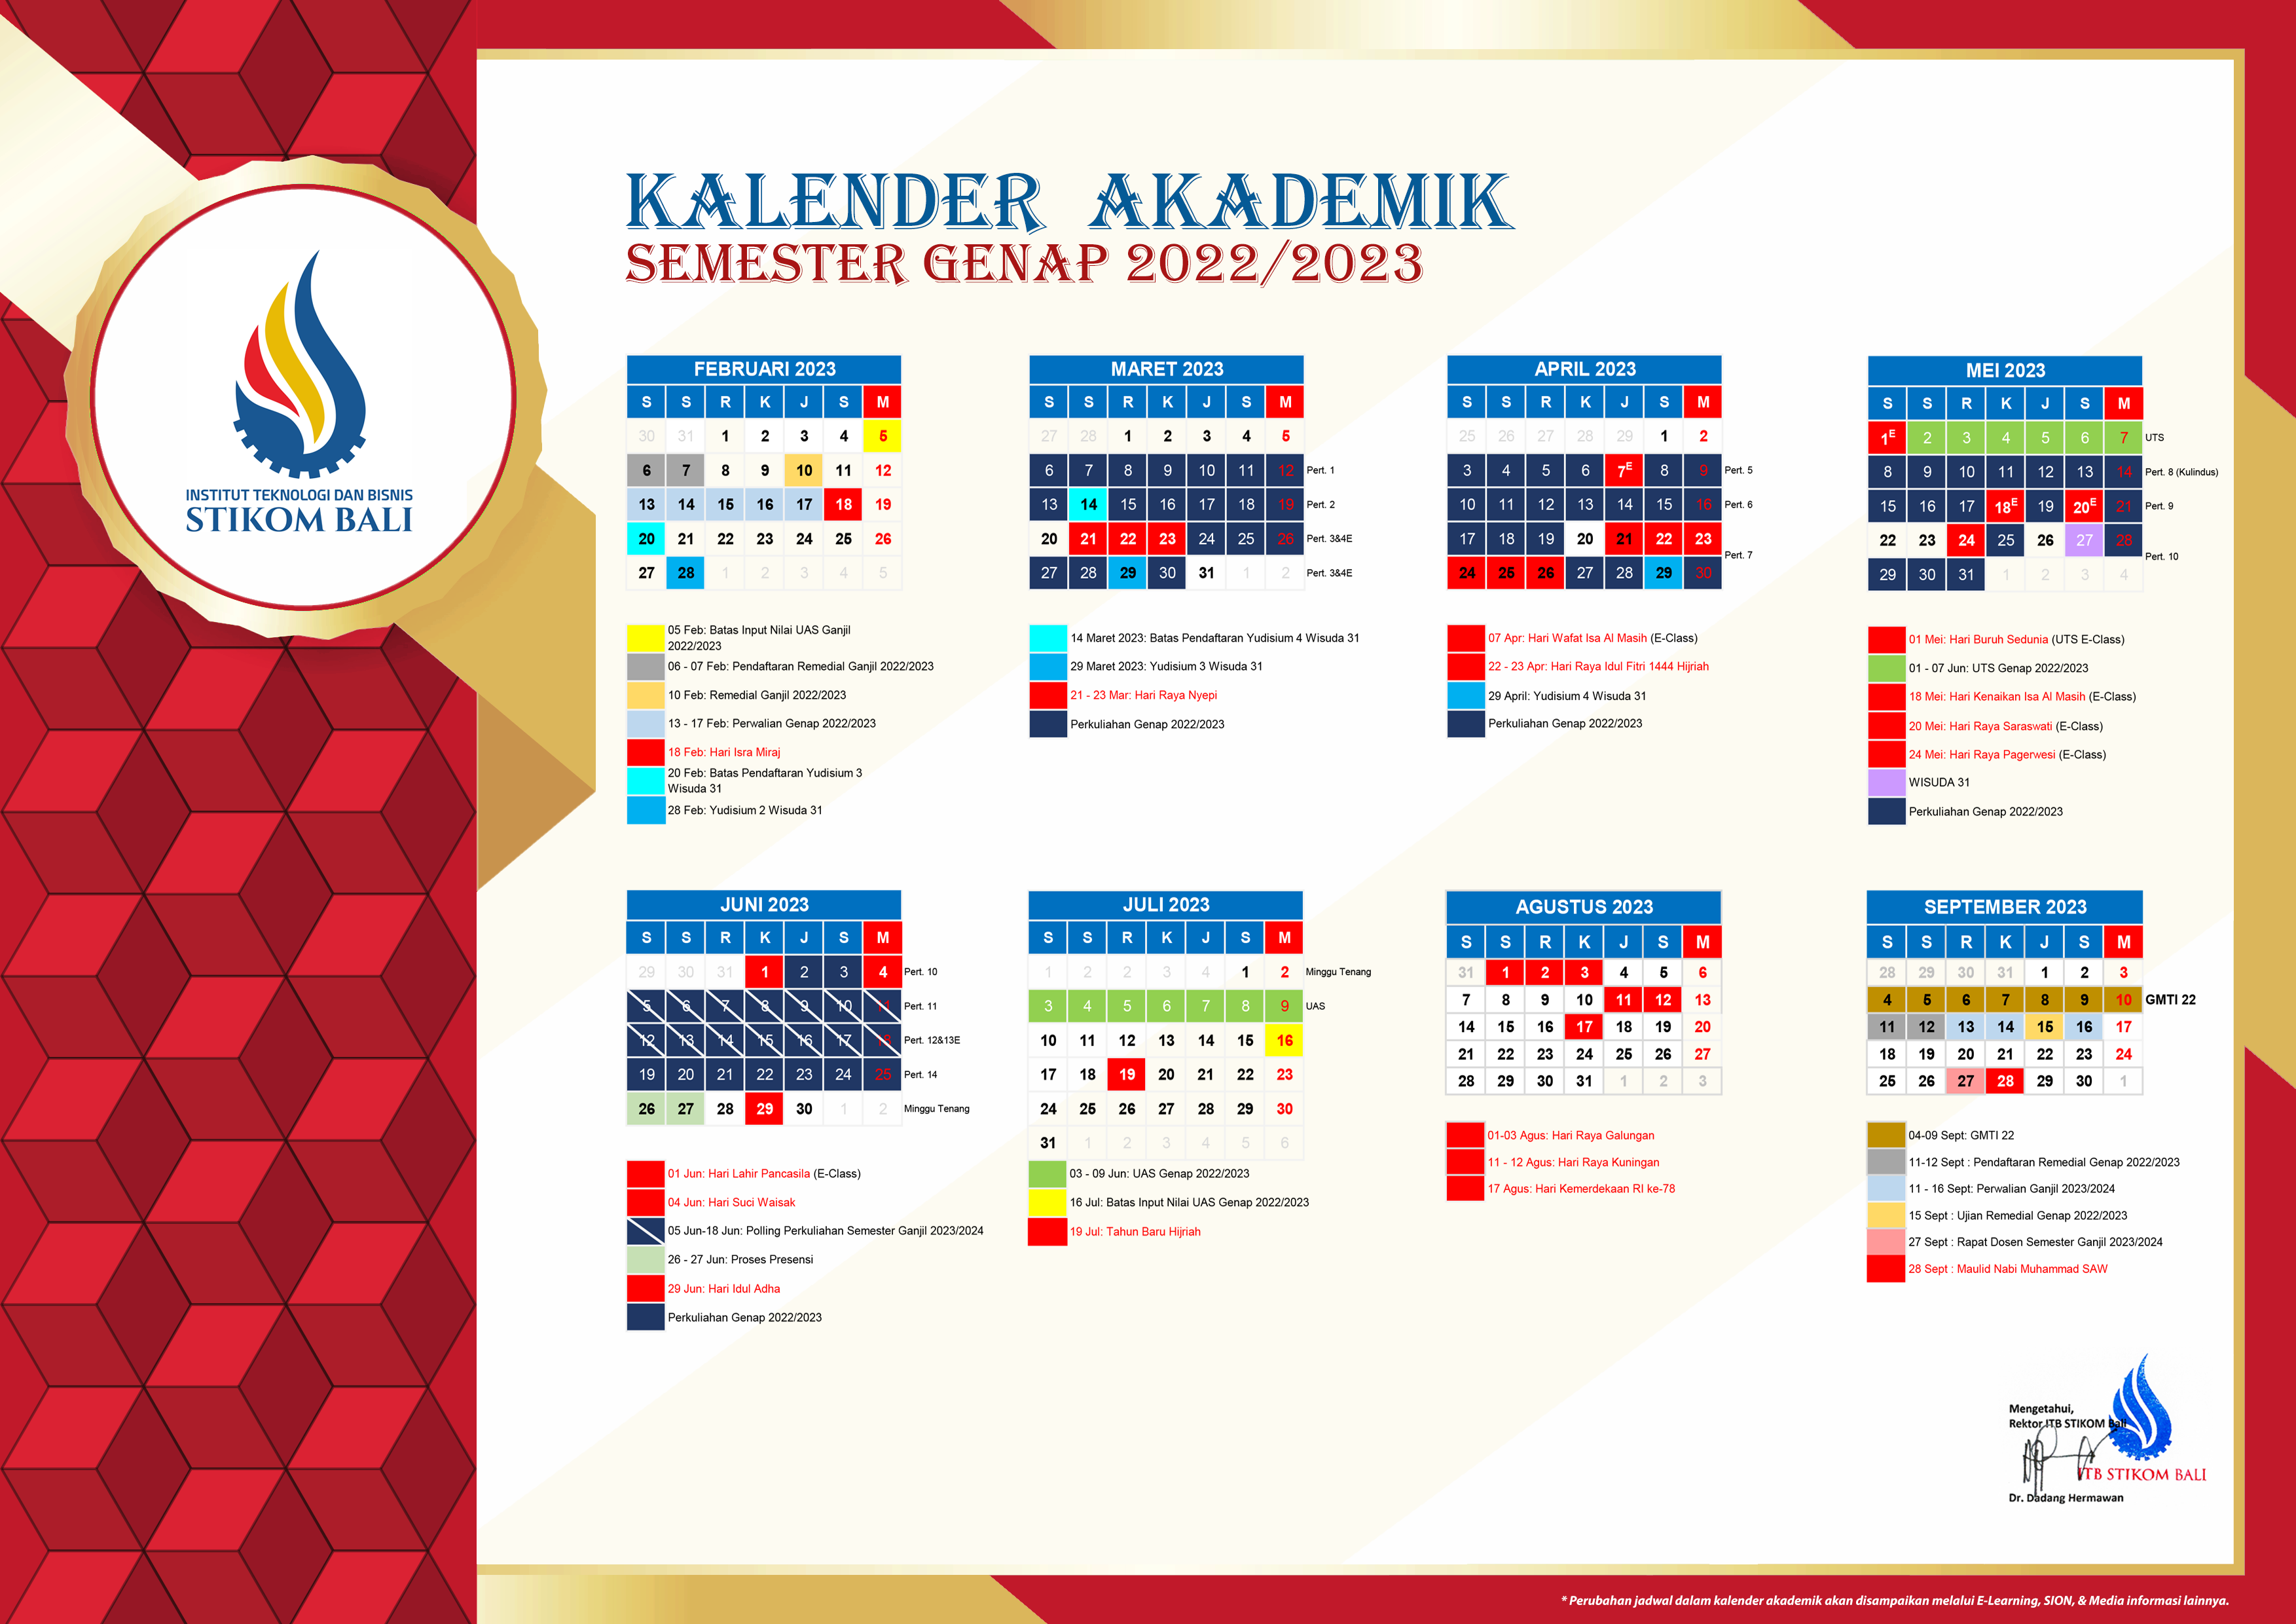 Lampiran Kalender Akademik Semester Genap 2022-2023 genap.png